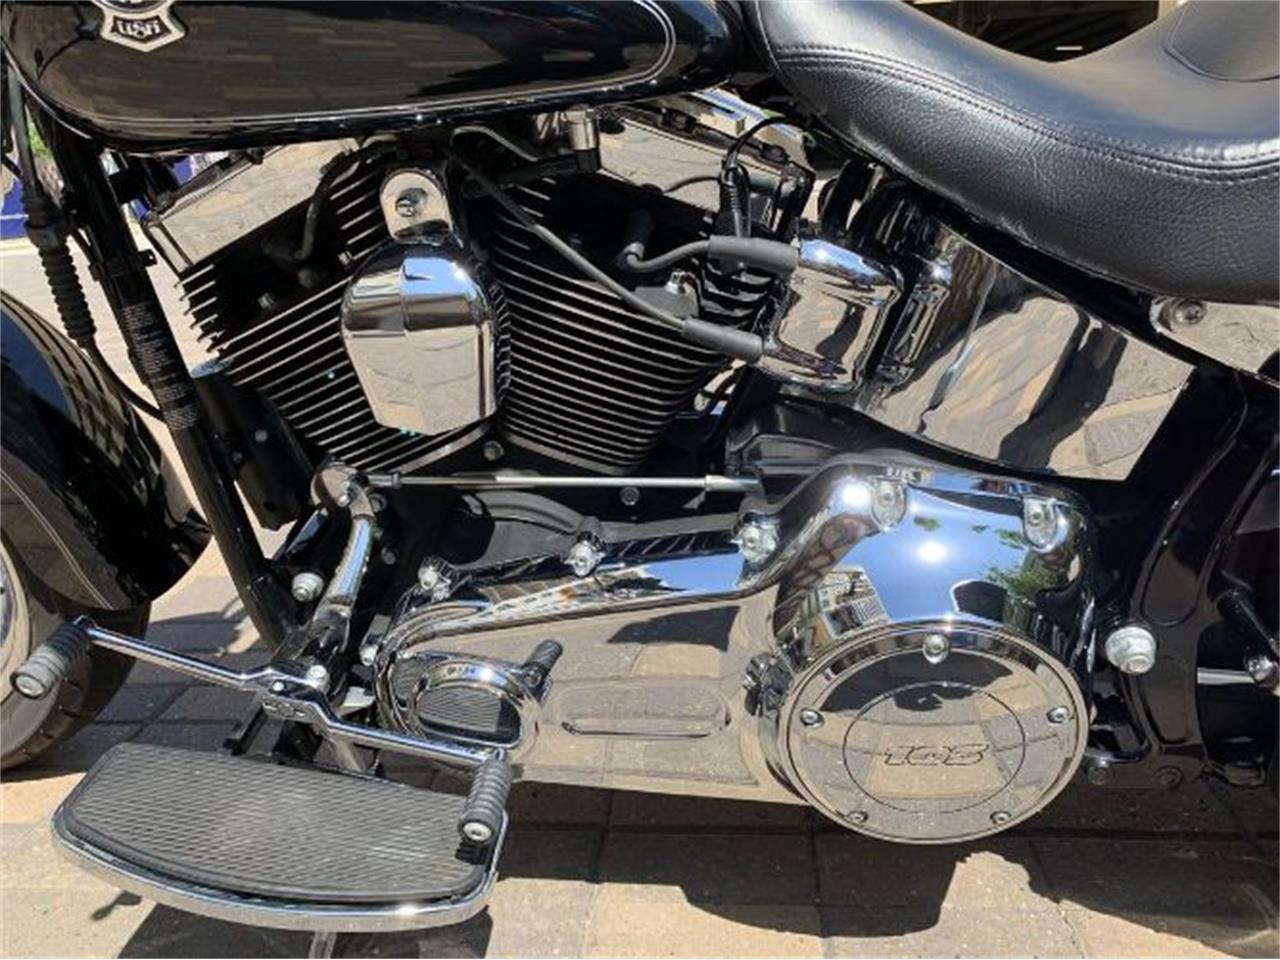 2014 Harley-Davidson Fat Boy for sale in Cadillac, MI – photo 7